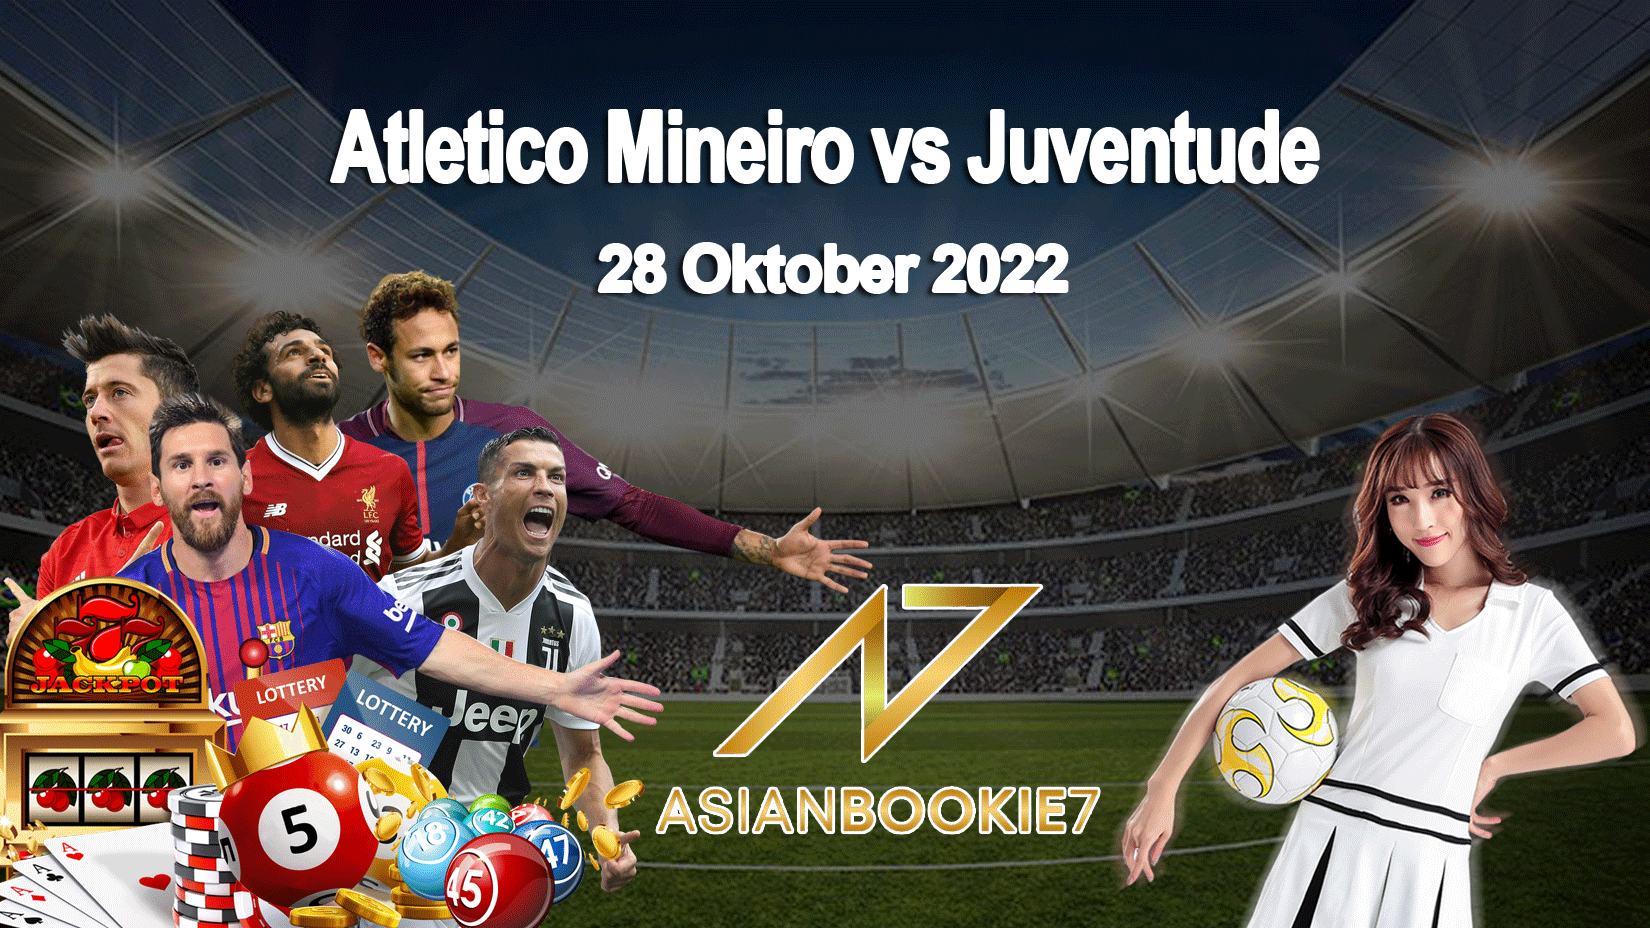 Prediksi-Atletico-Mineiro-vs-Juventude-28-Oktober-2022